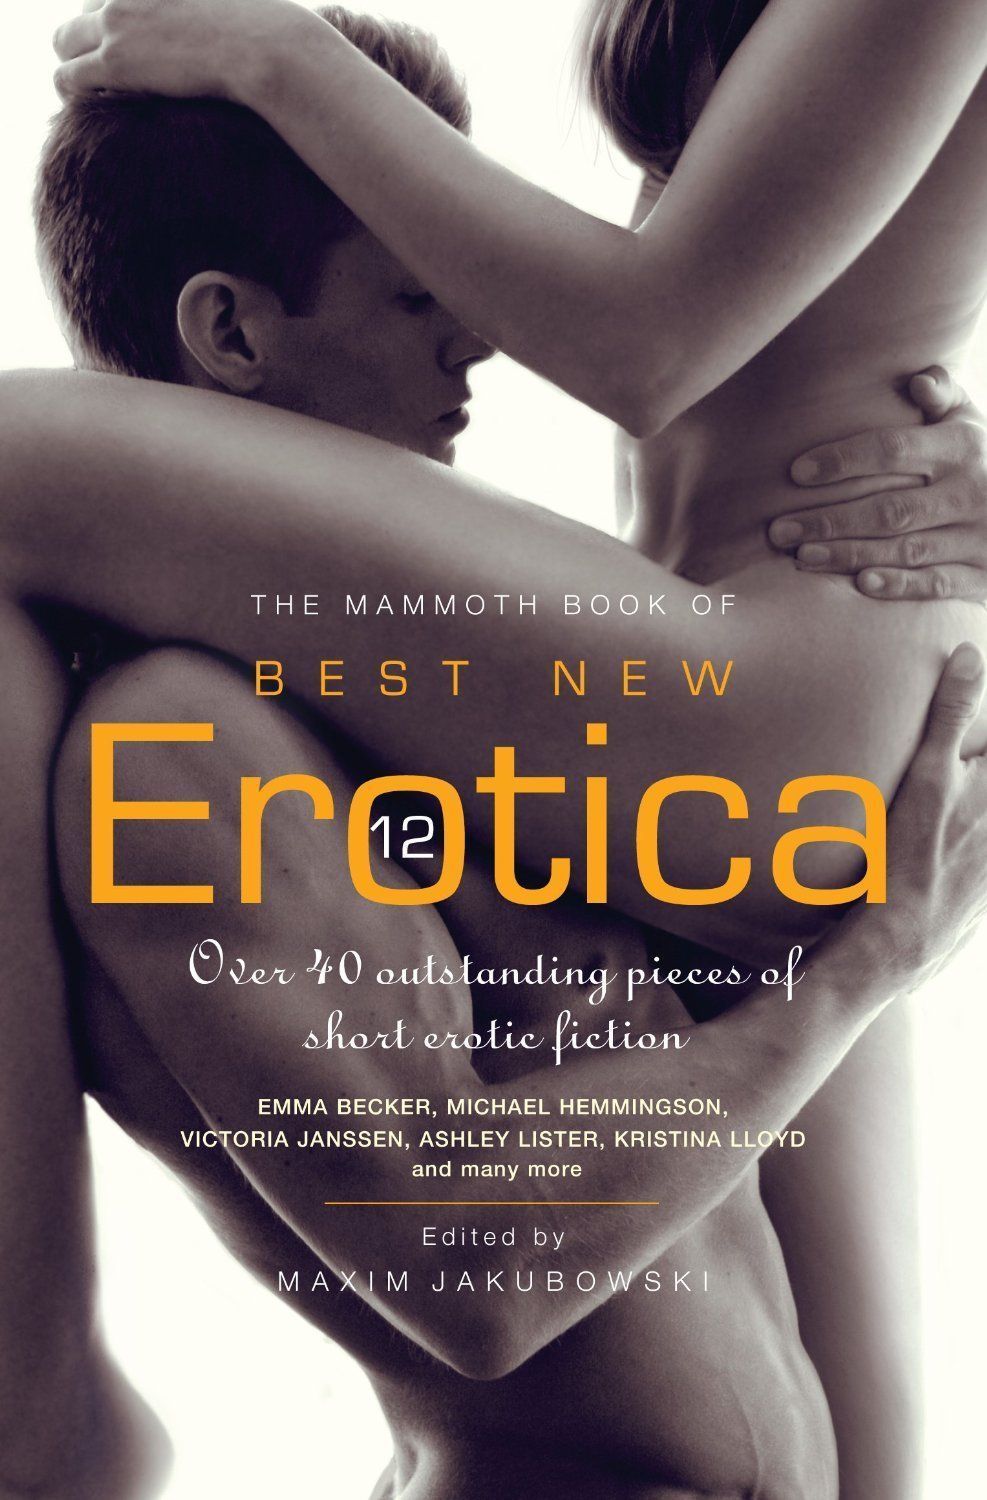 Giggles reccomend Erotica short stories for women